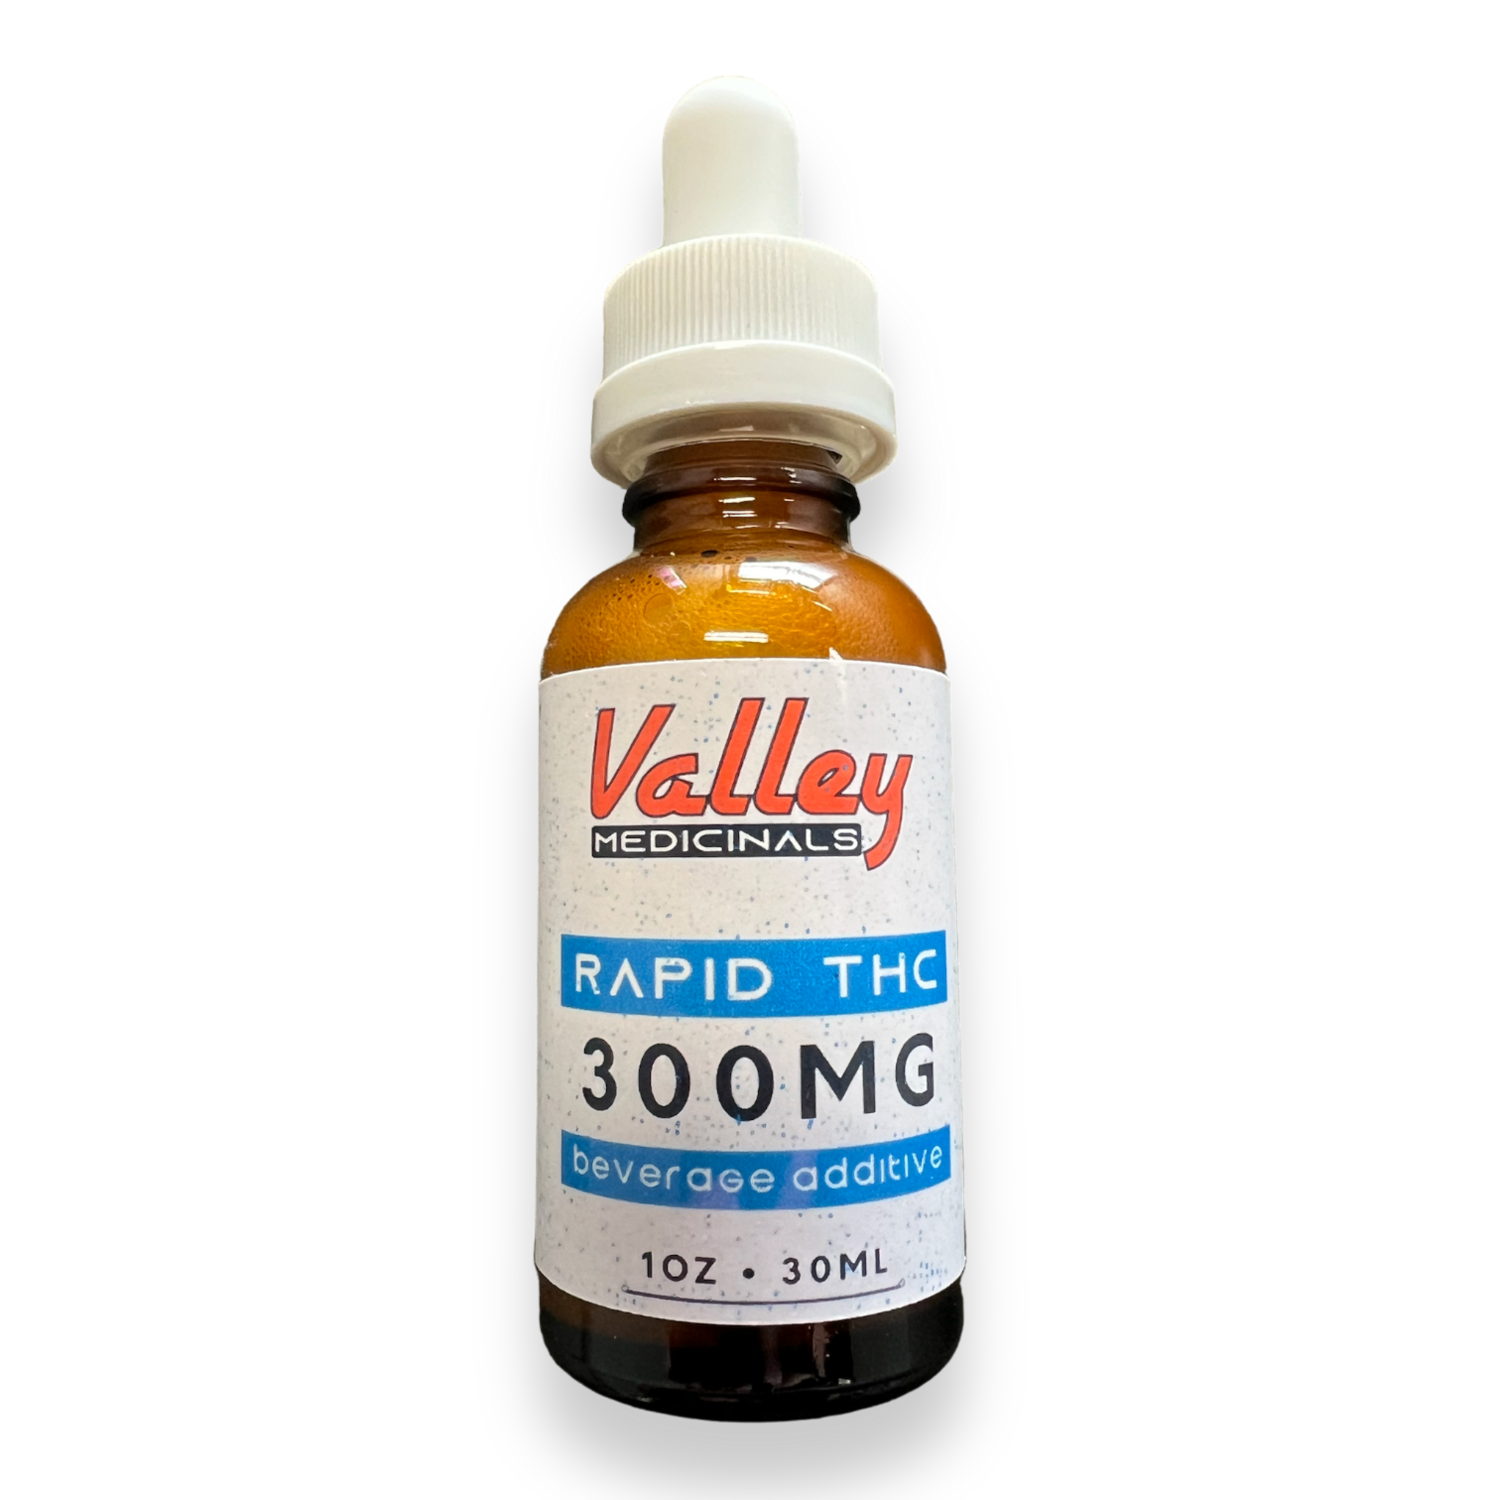 Valley Medicinals’ Rapid THC D9 Drink Additive 